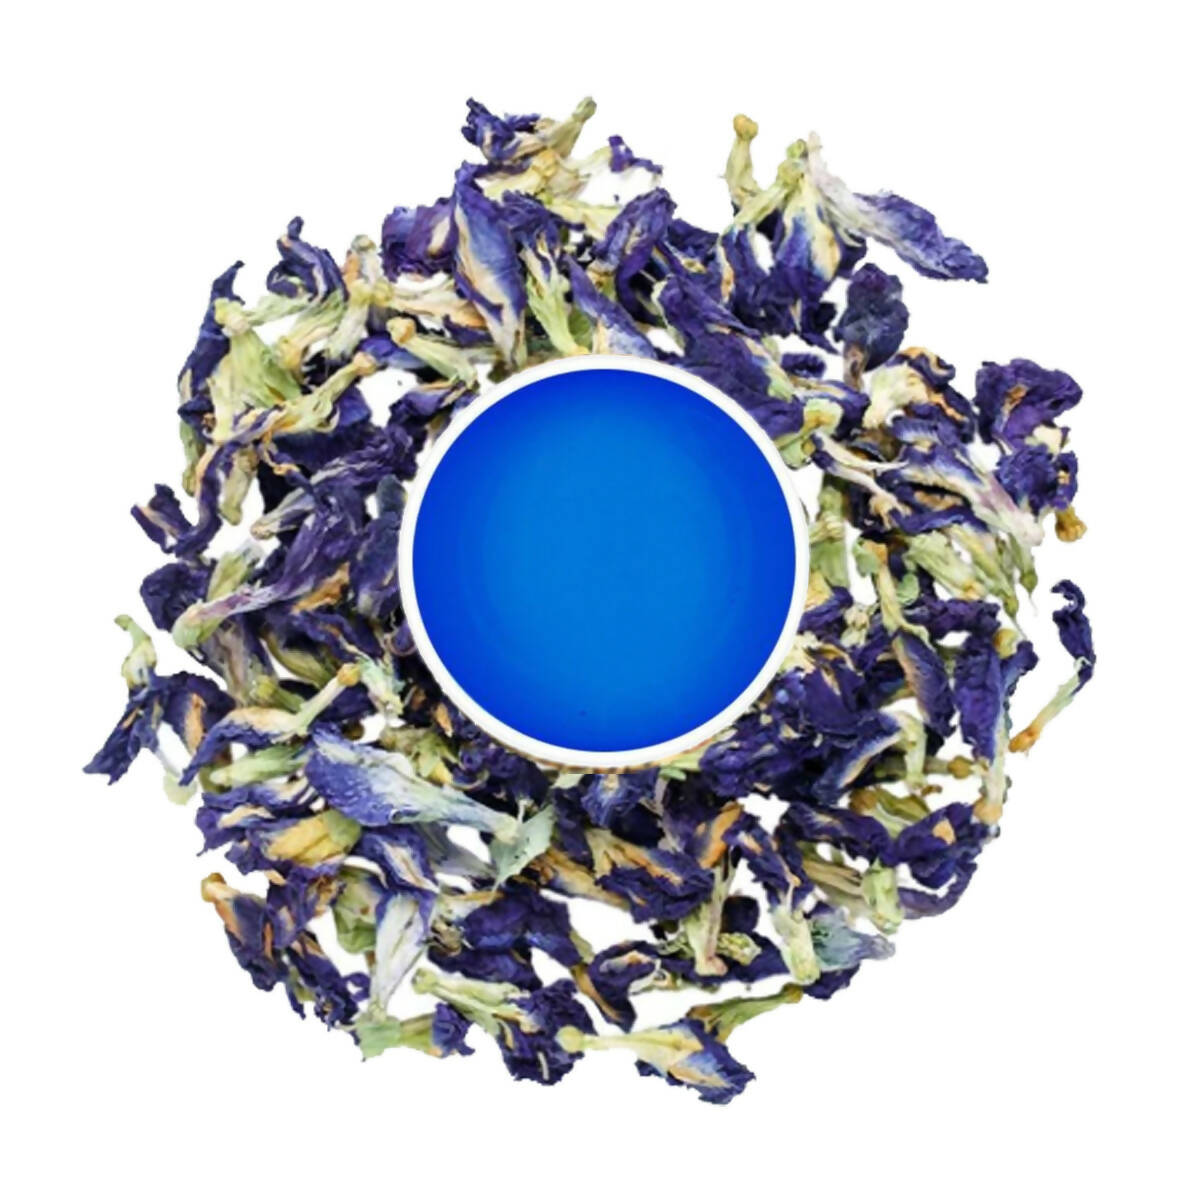 The Tea Shore Blue Pea Flower - 30g (51 Cups of Blue Tea) | Caffeine-Free Herbal Tea Wemy Store